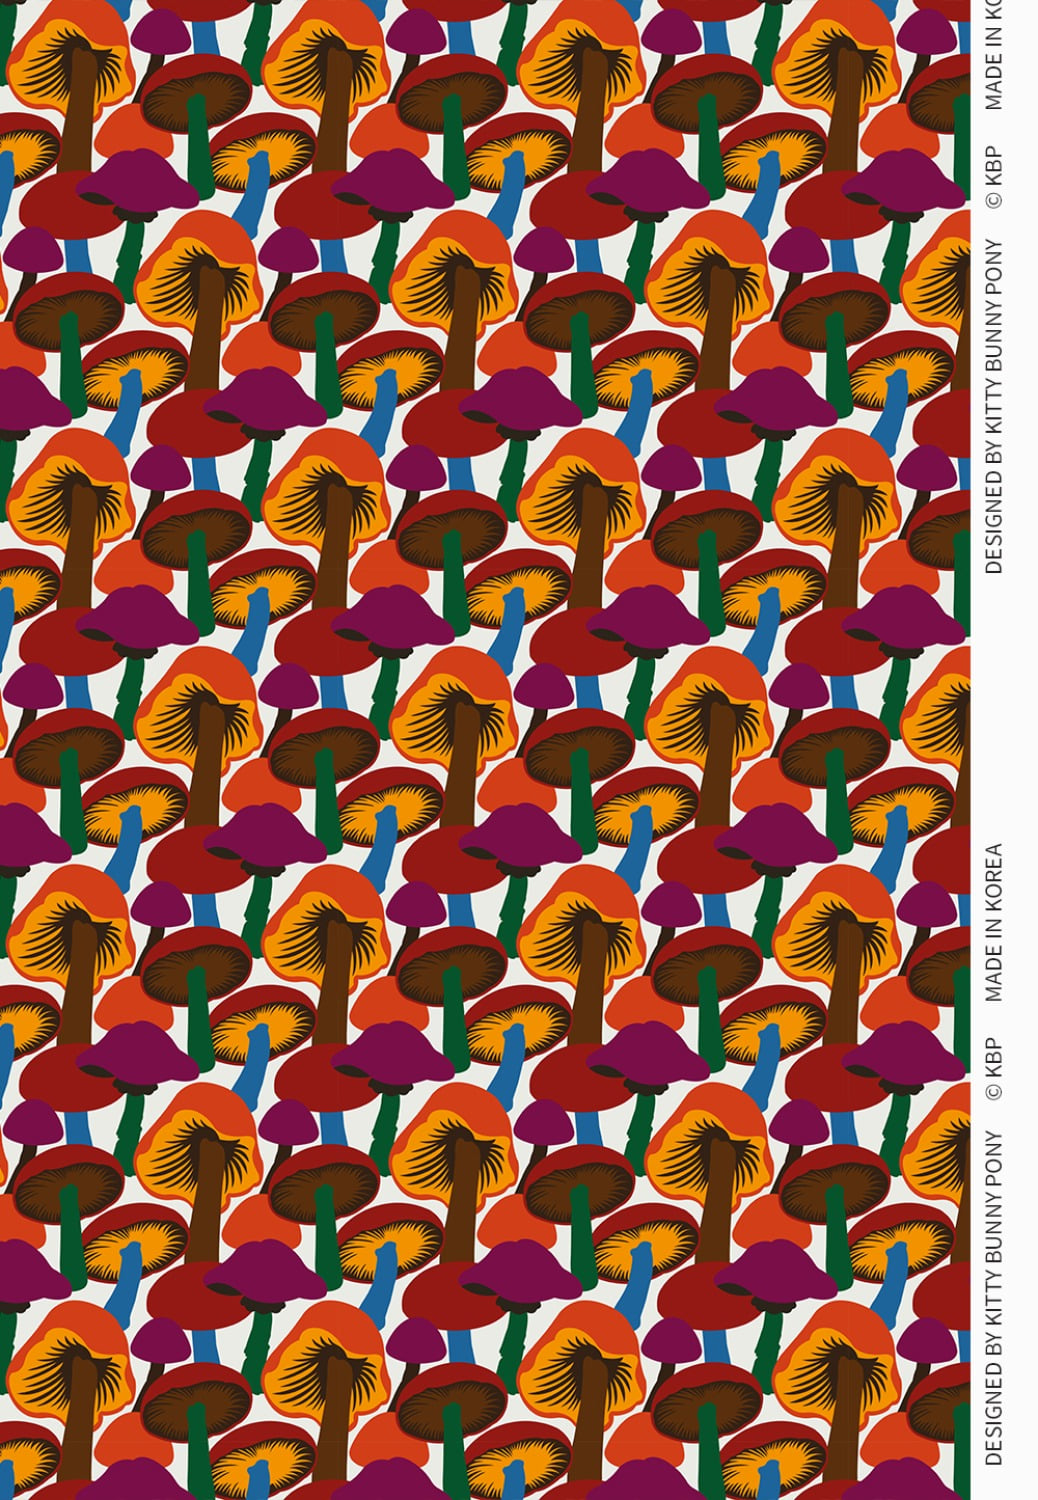 KBP Fabrics Wild Mushroom Fabric